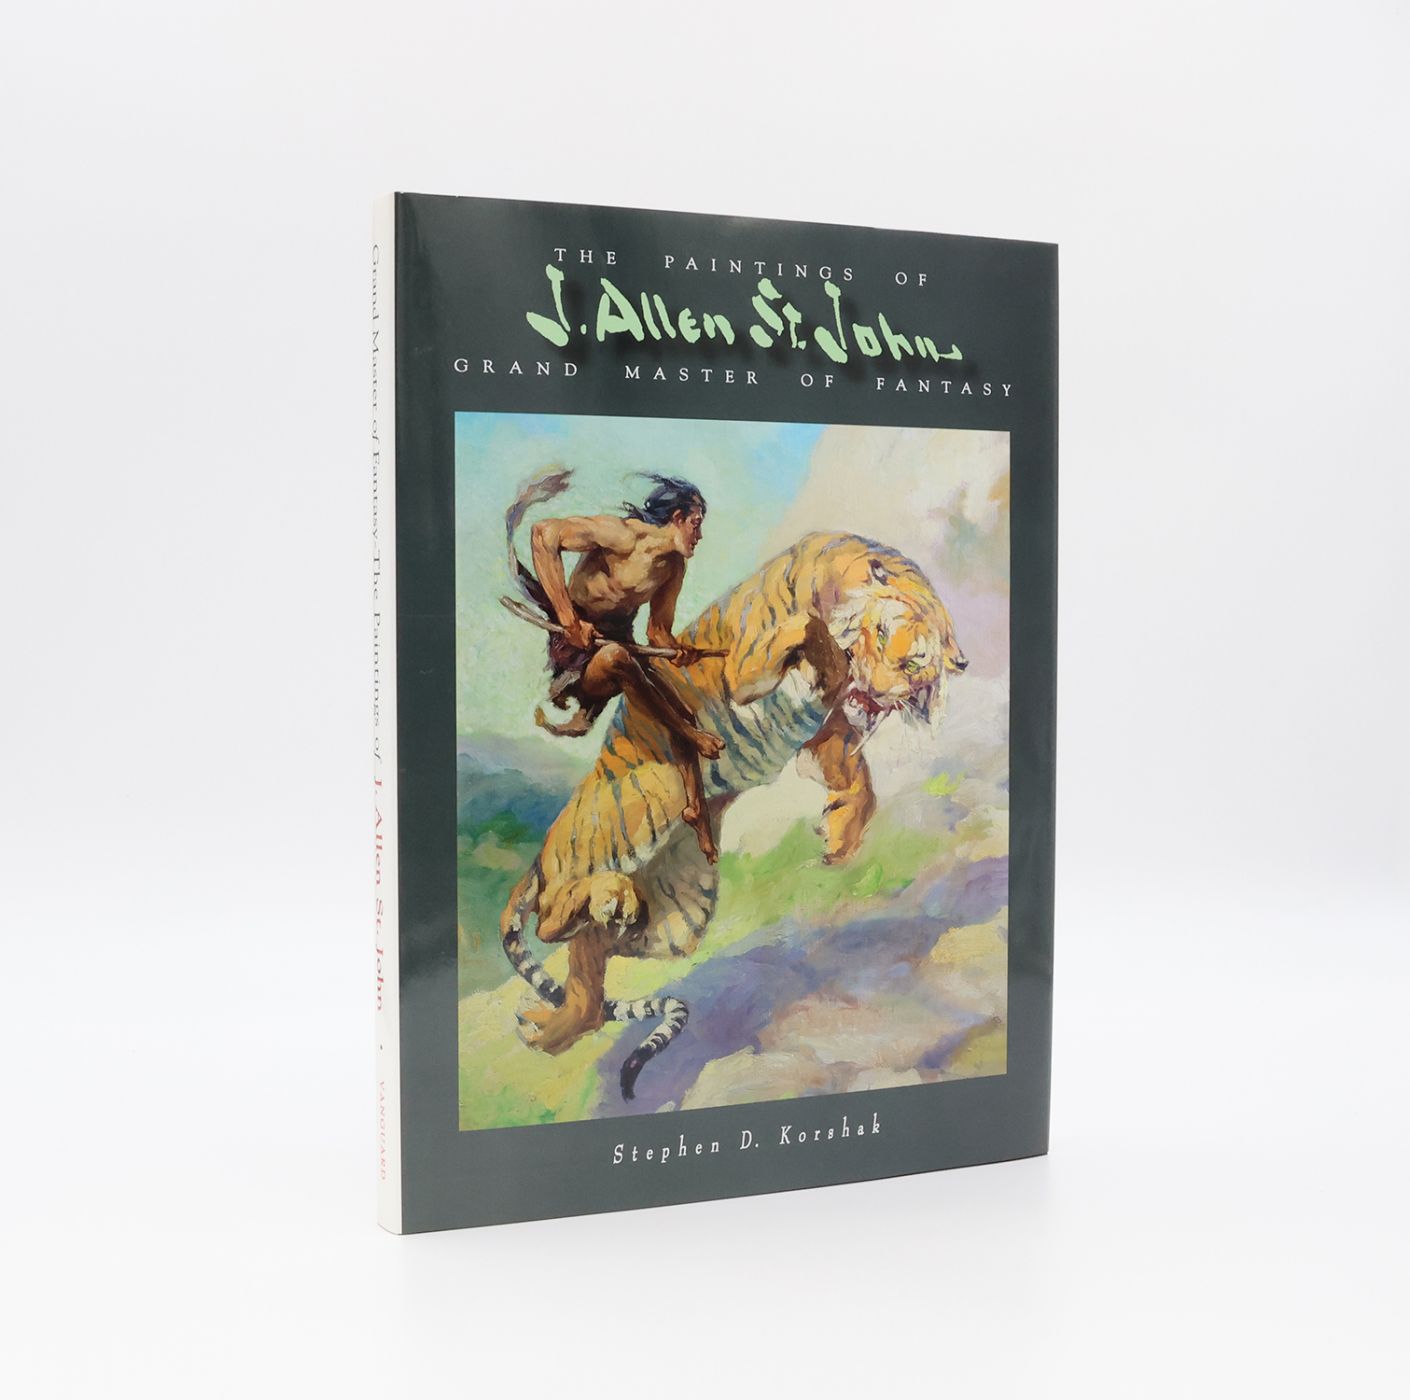 GRAND MASTER OF FANTASY: THE PAINTINGS OF J. ALLEN ST. JOHN -  image 2